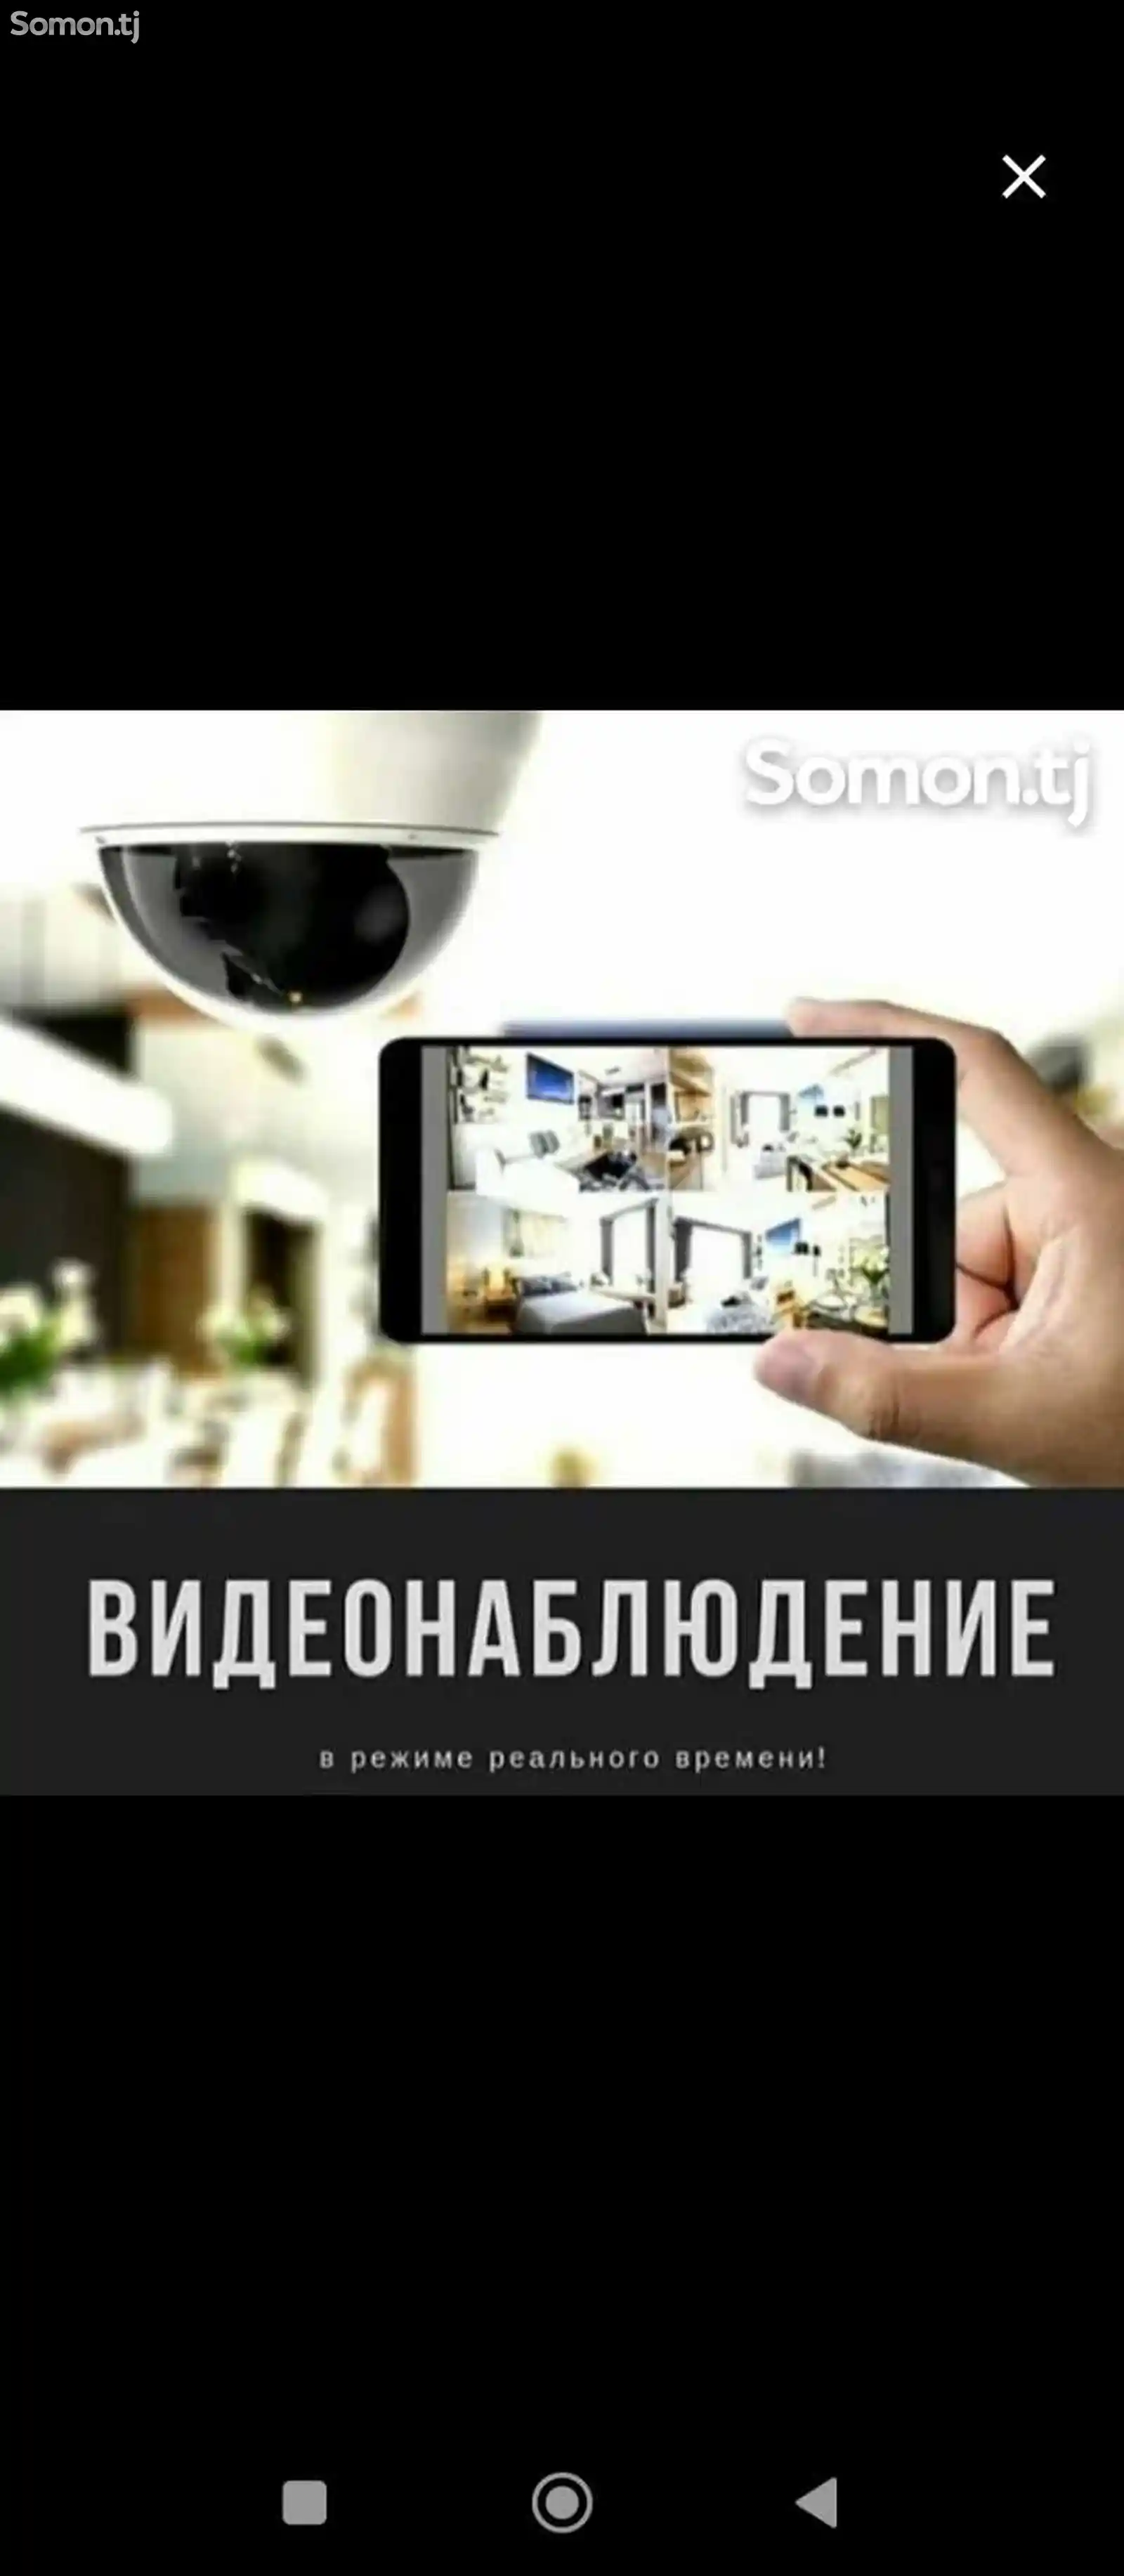 Услуги установки камер видеонаблюдения-2